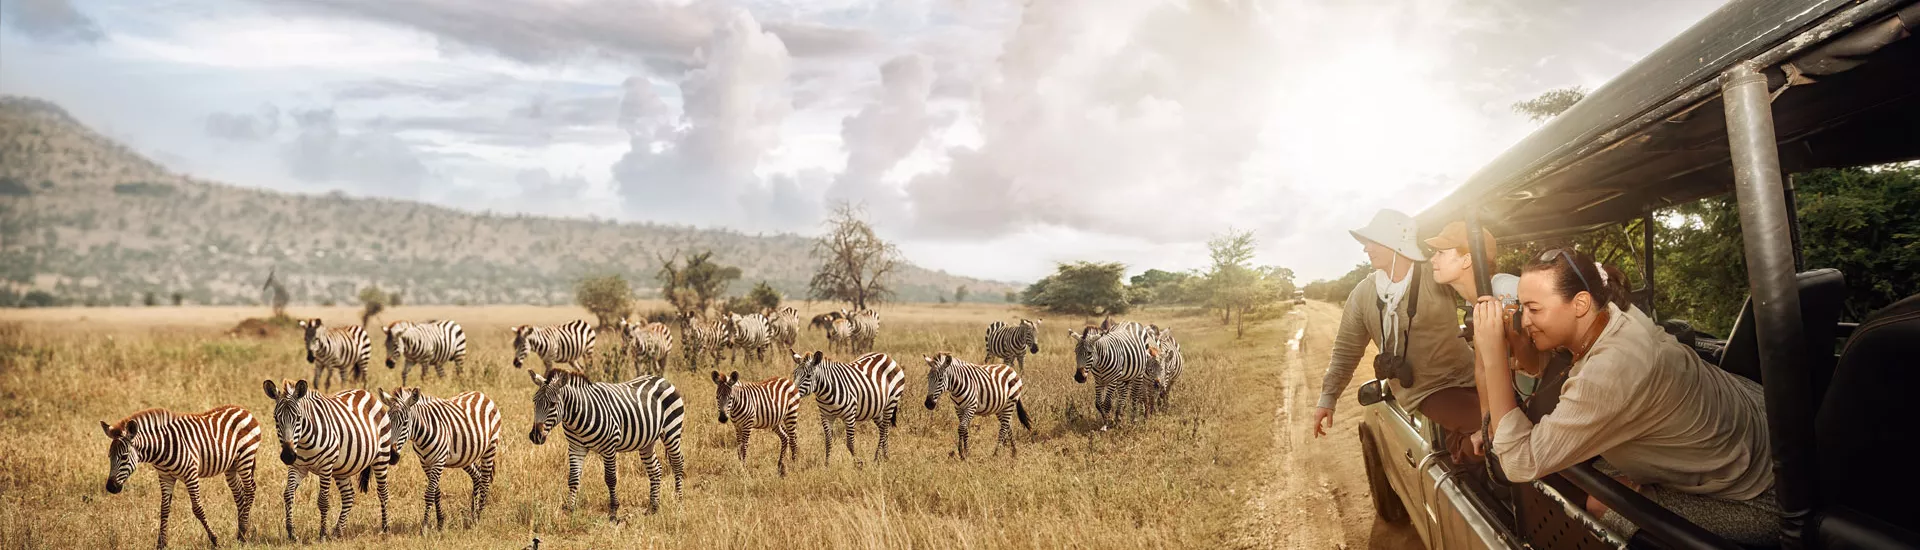 Wilde Zebras auf einer Safari-Tour im Nationalpark auf Tansania